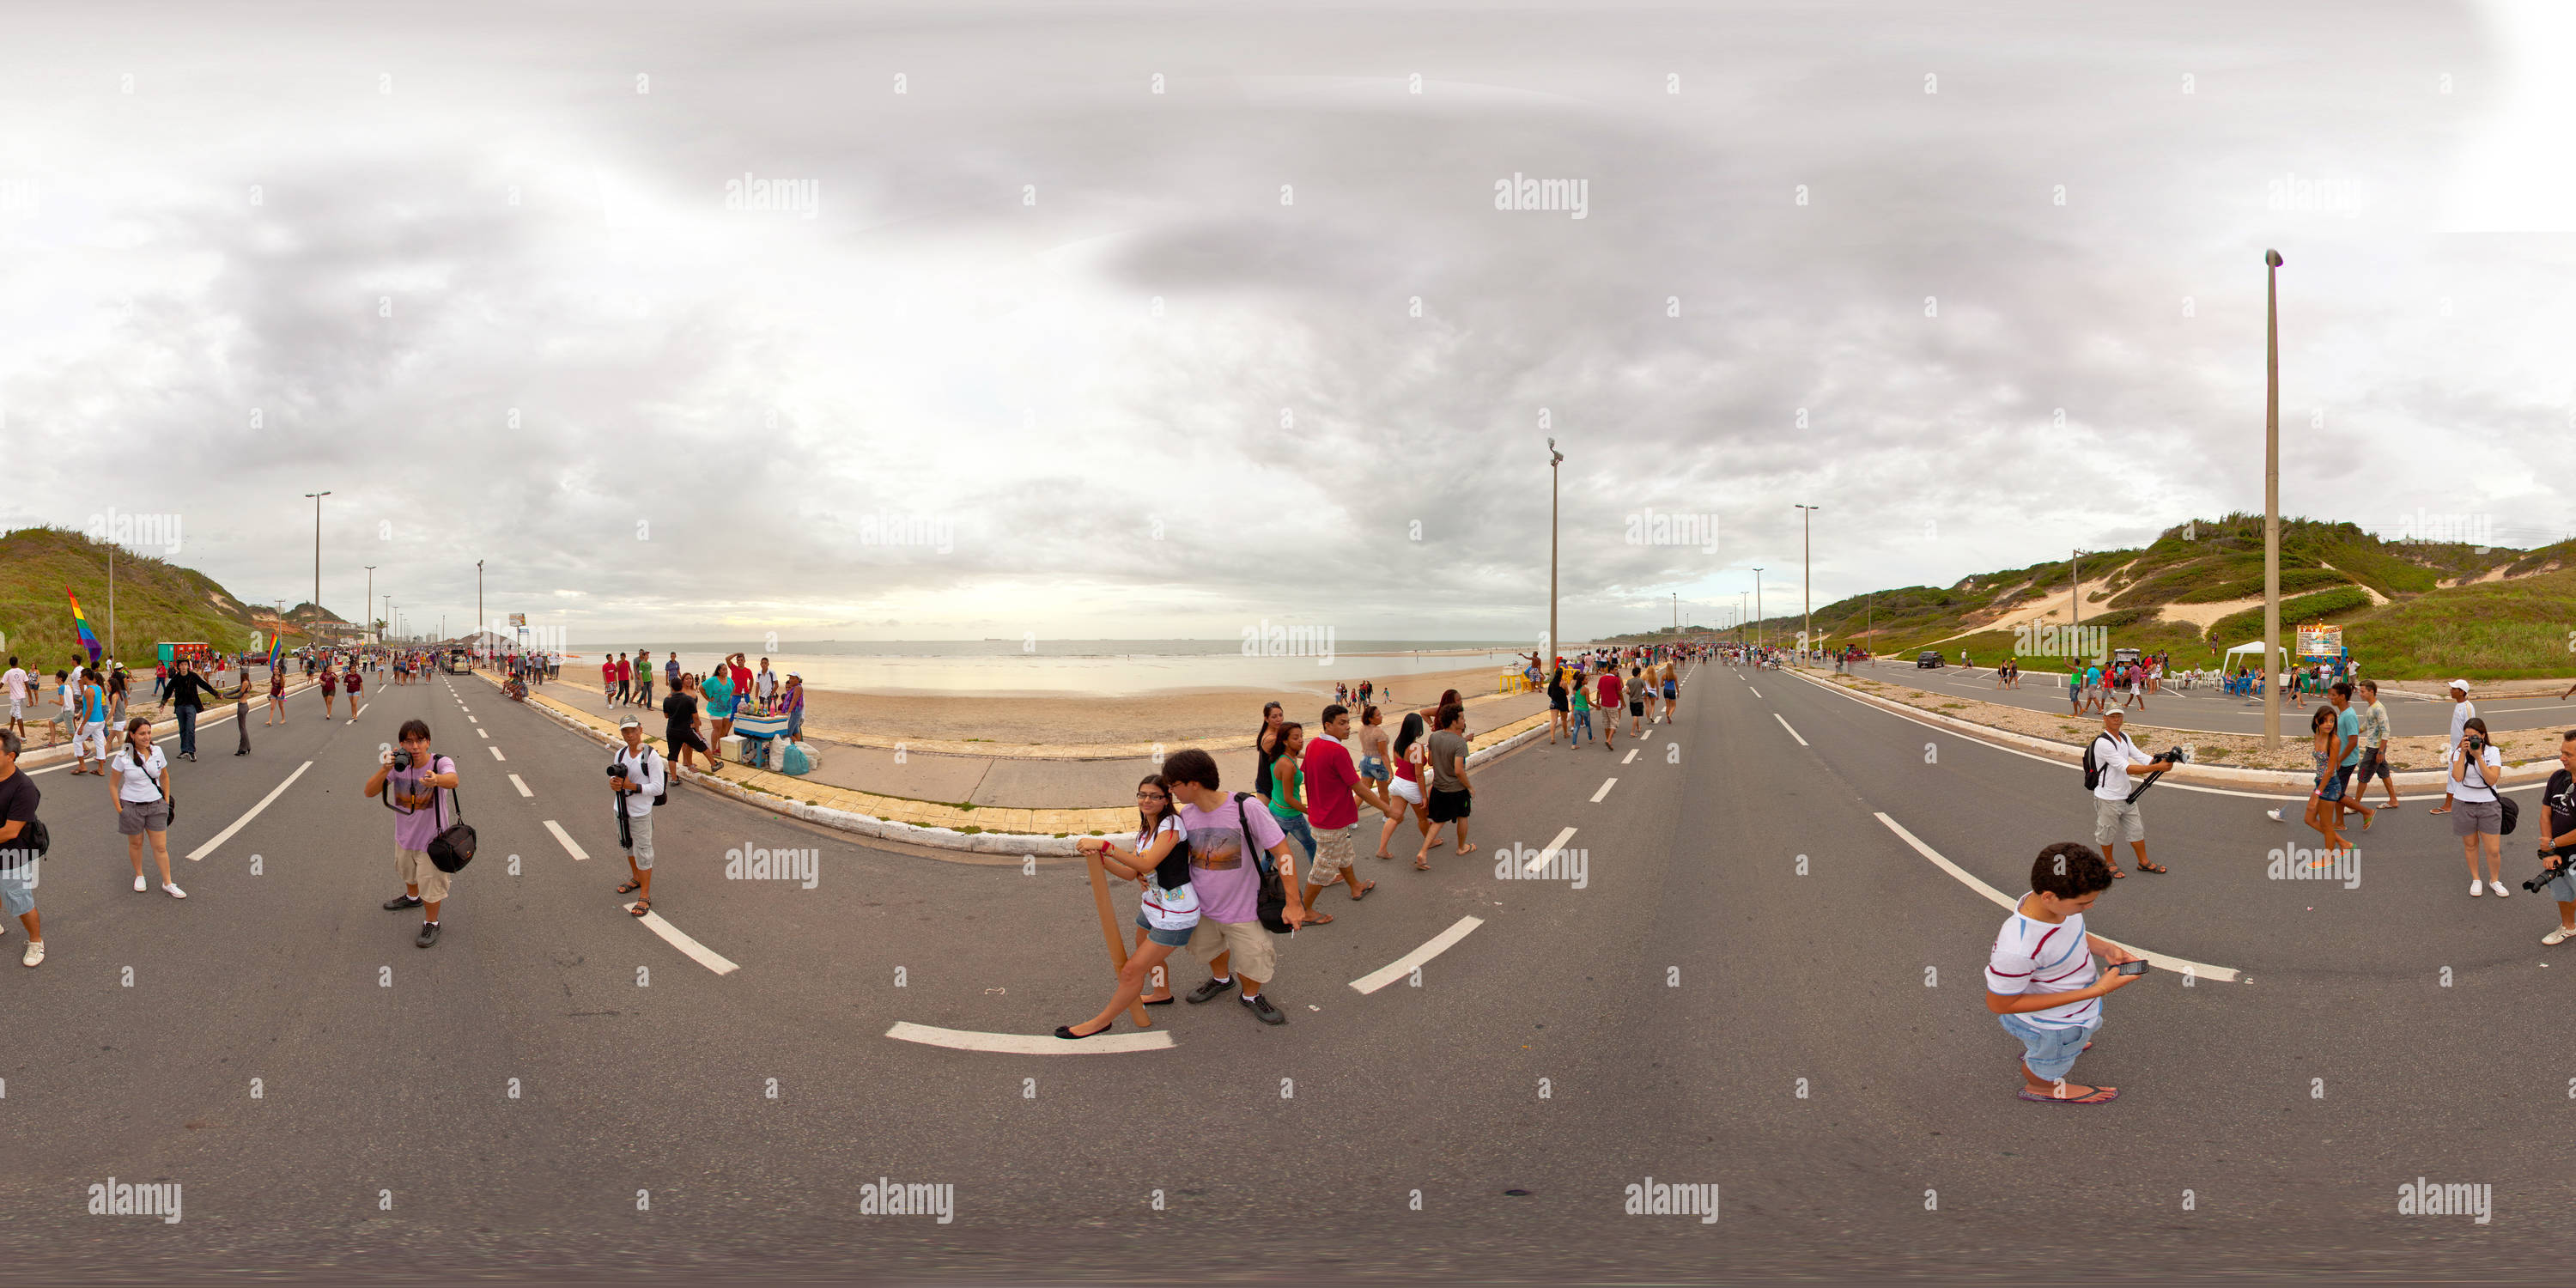 Visualizzazione panoramica a 360 gradi di IMG 2614 Panorama Cube equi 1 Enviar 360Cities